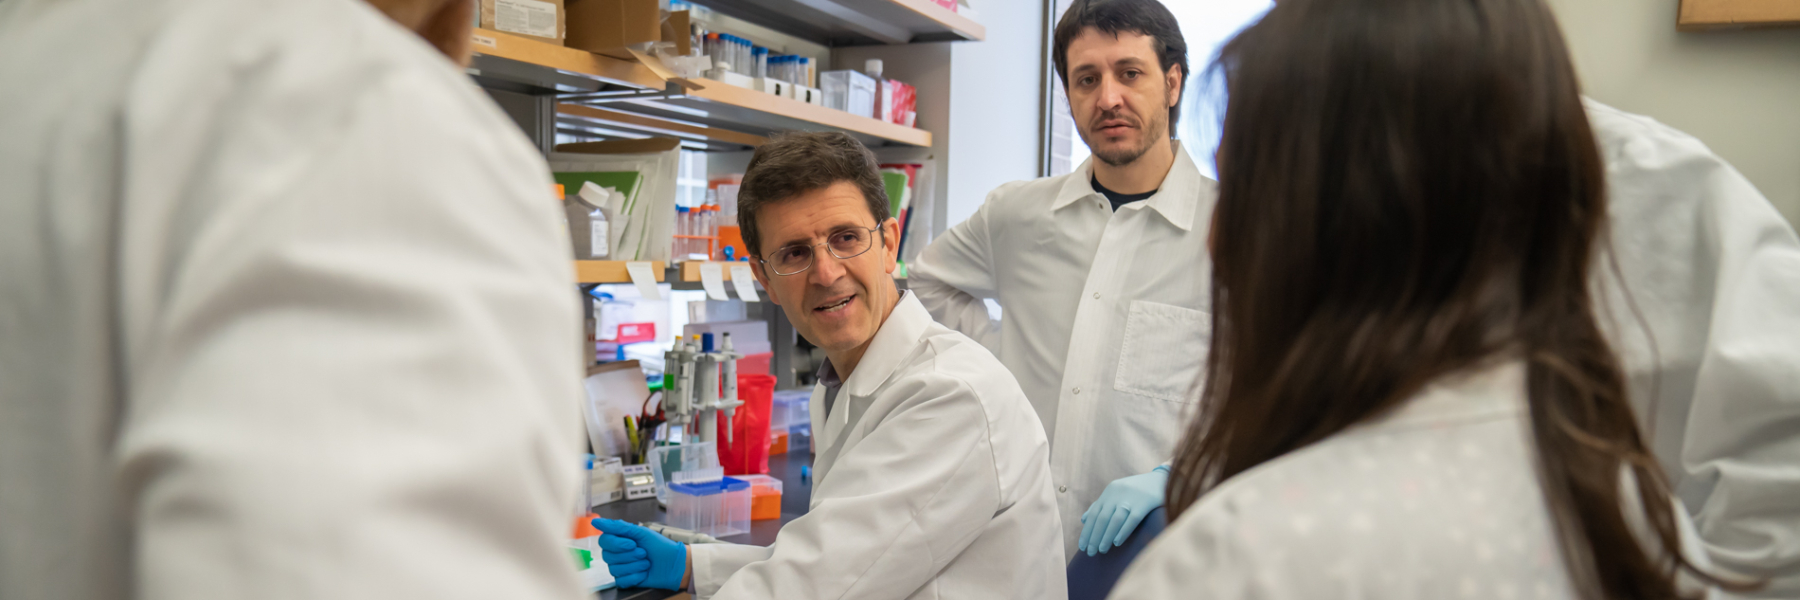 Dr. Luigi Puglielli talks with researchers in the lab